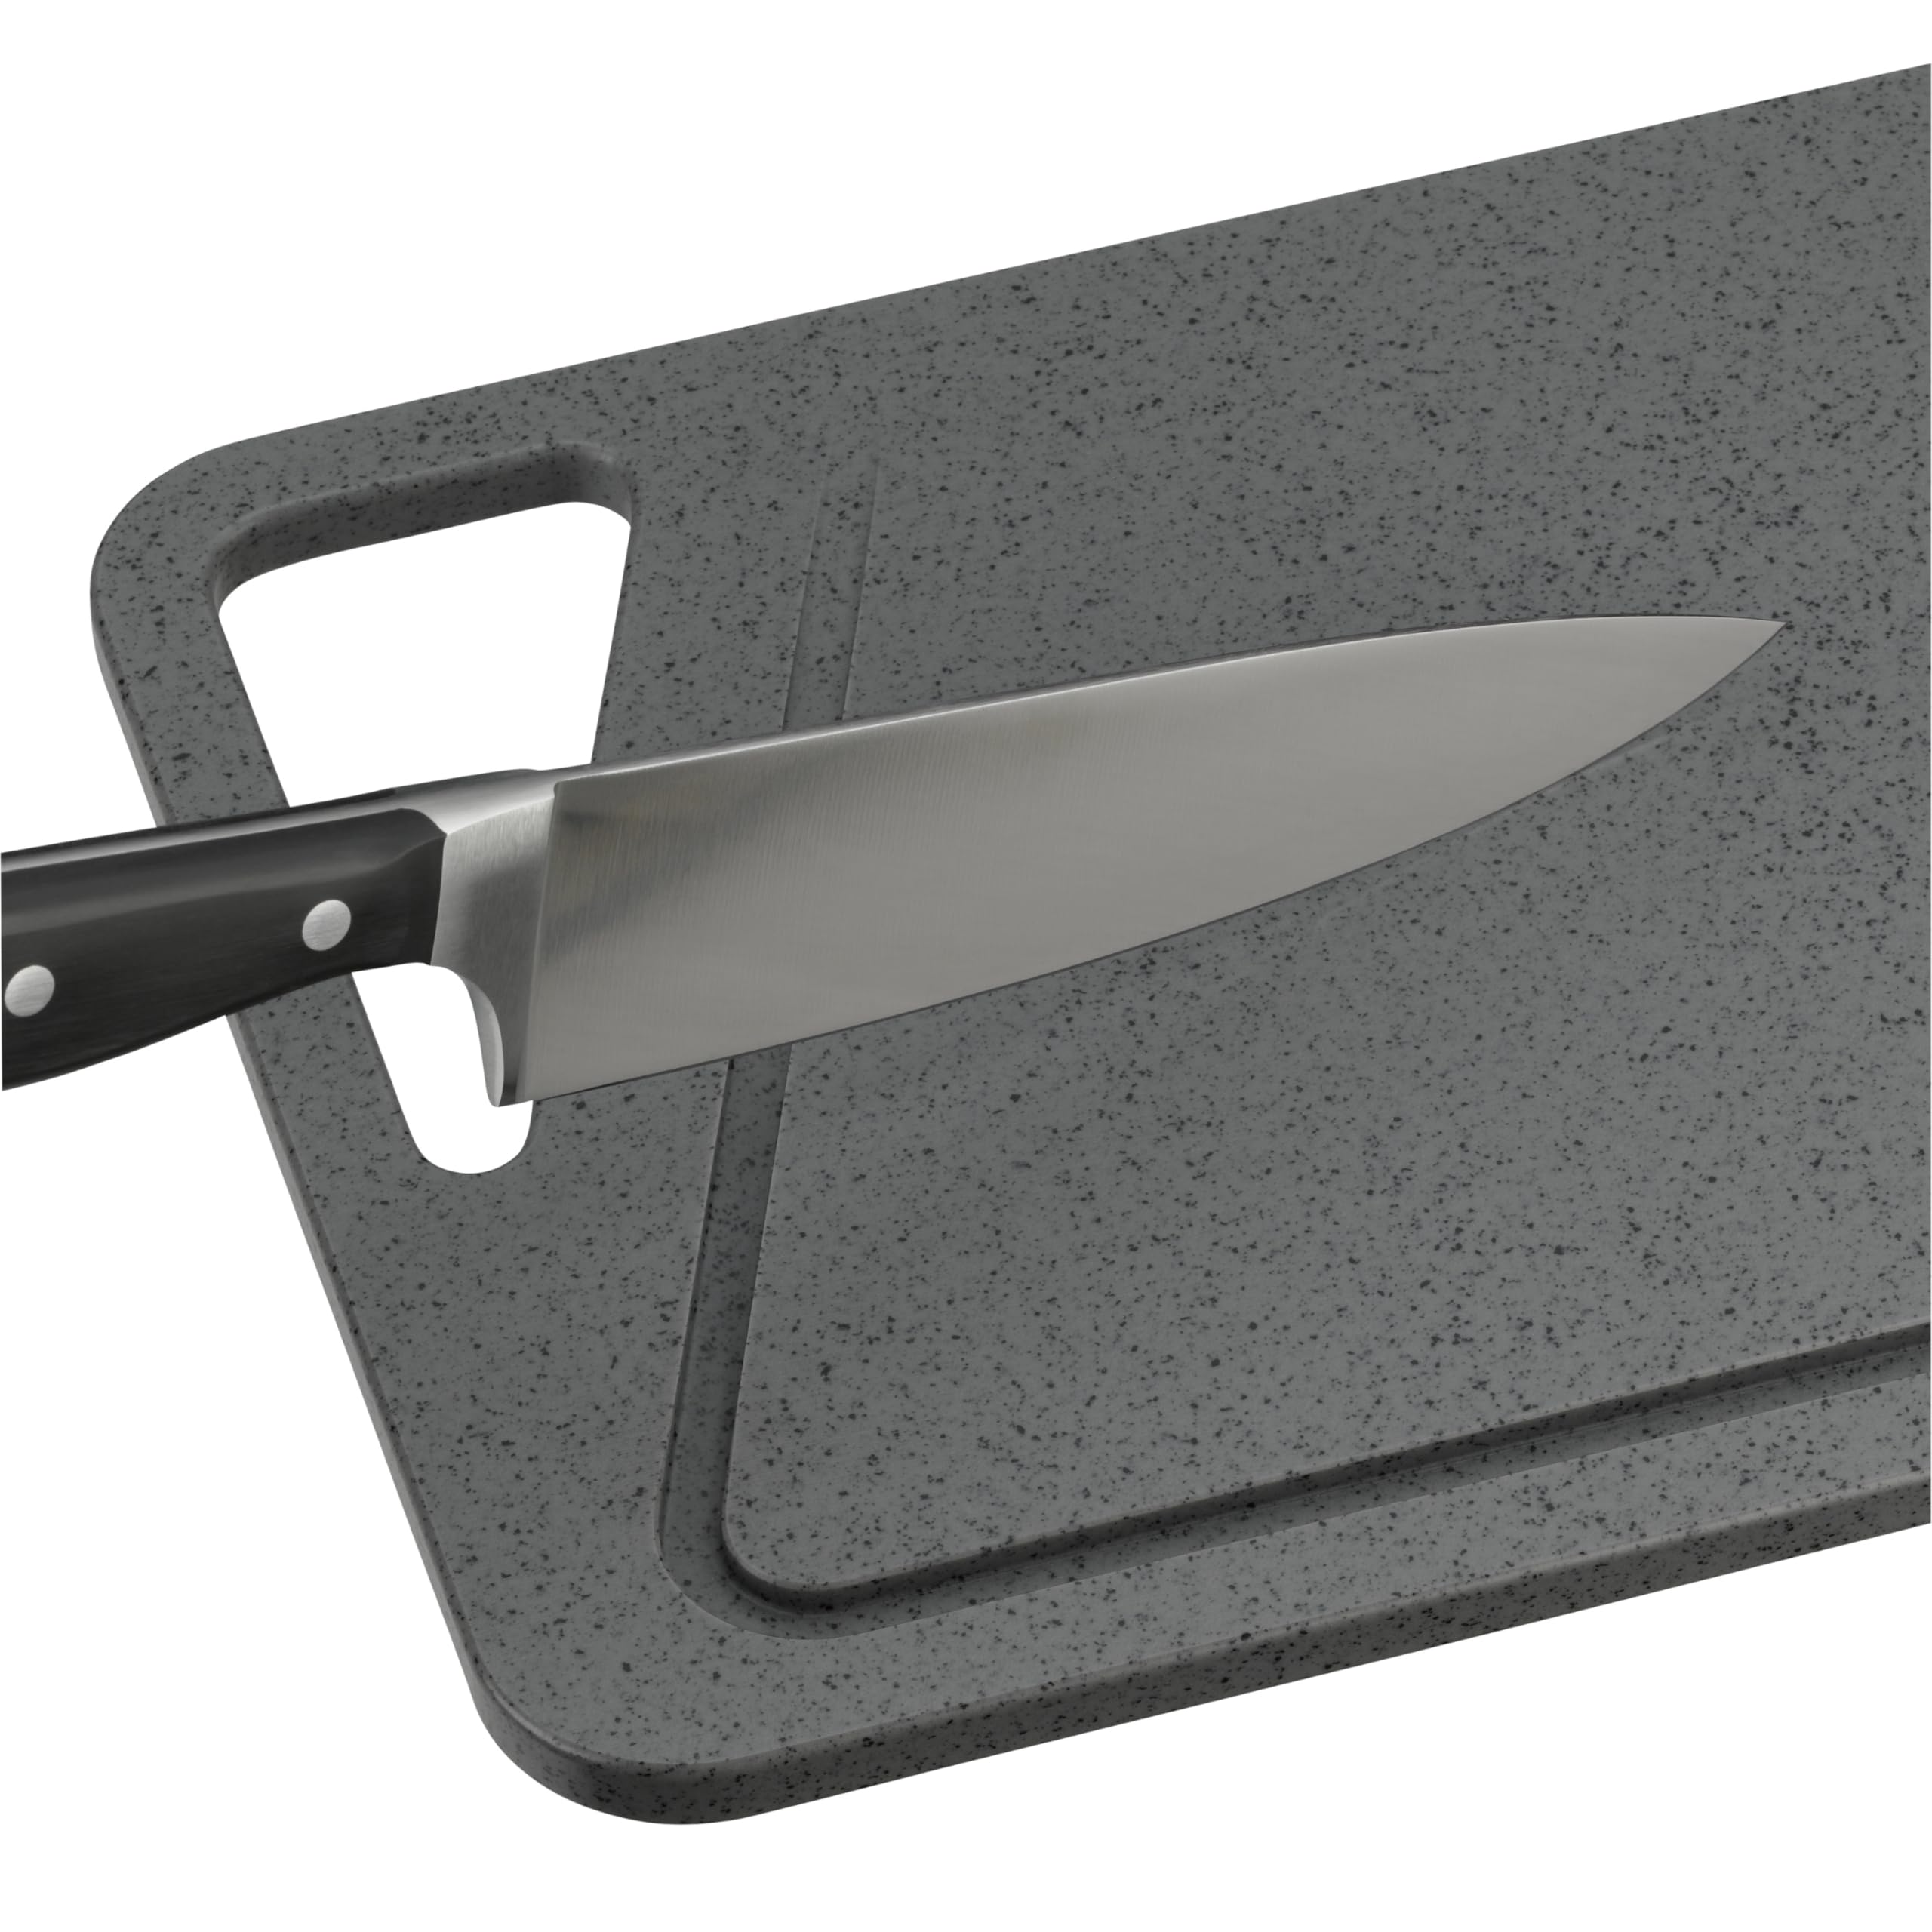 WMF Cutting Board, Stainless Steel, Grey, 38 x 25 cm